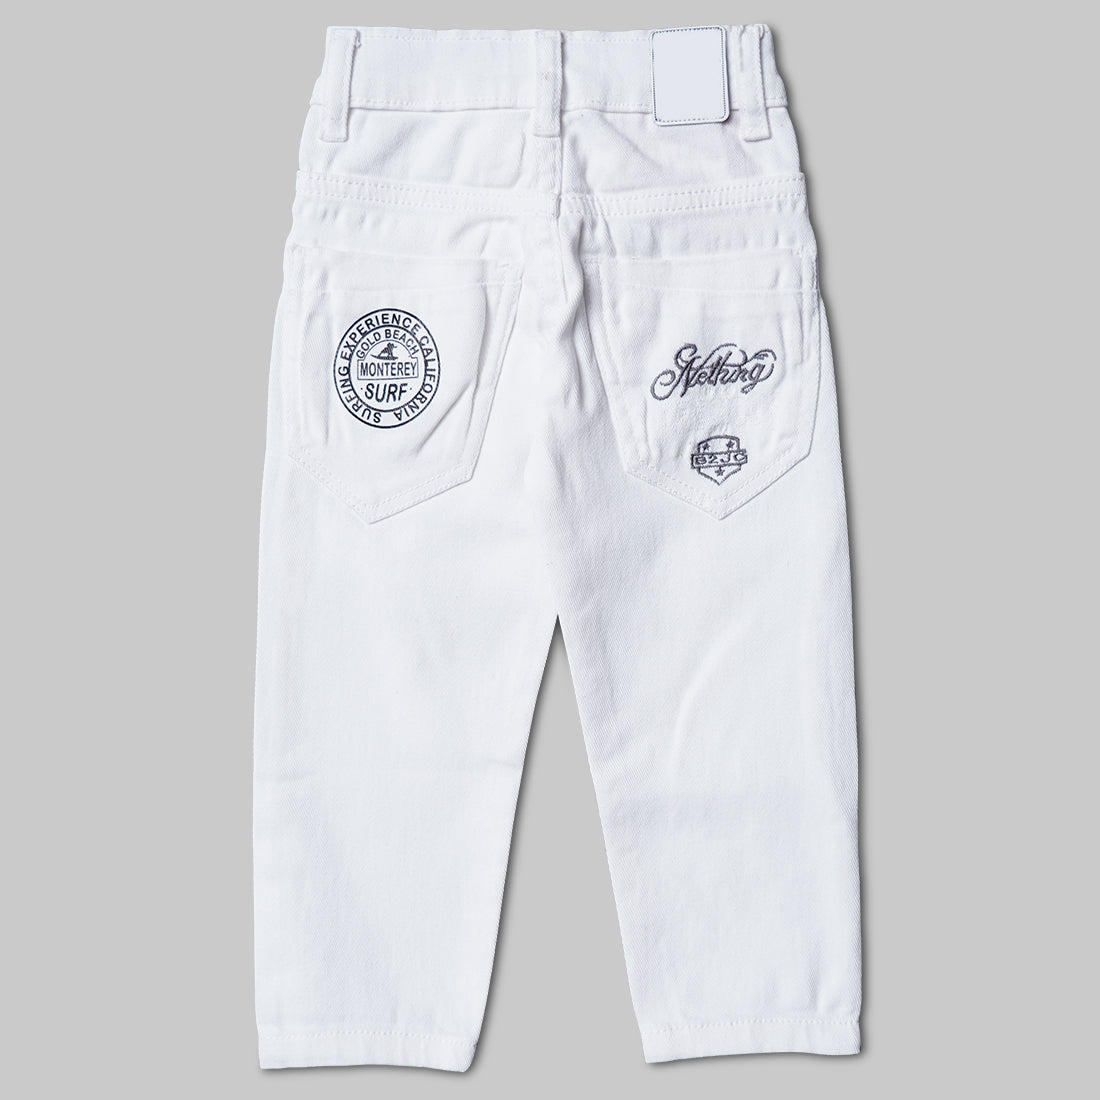 Buy Slub Junior White Track Pants for Kids at Amazon.in